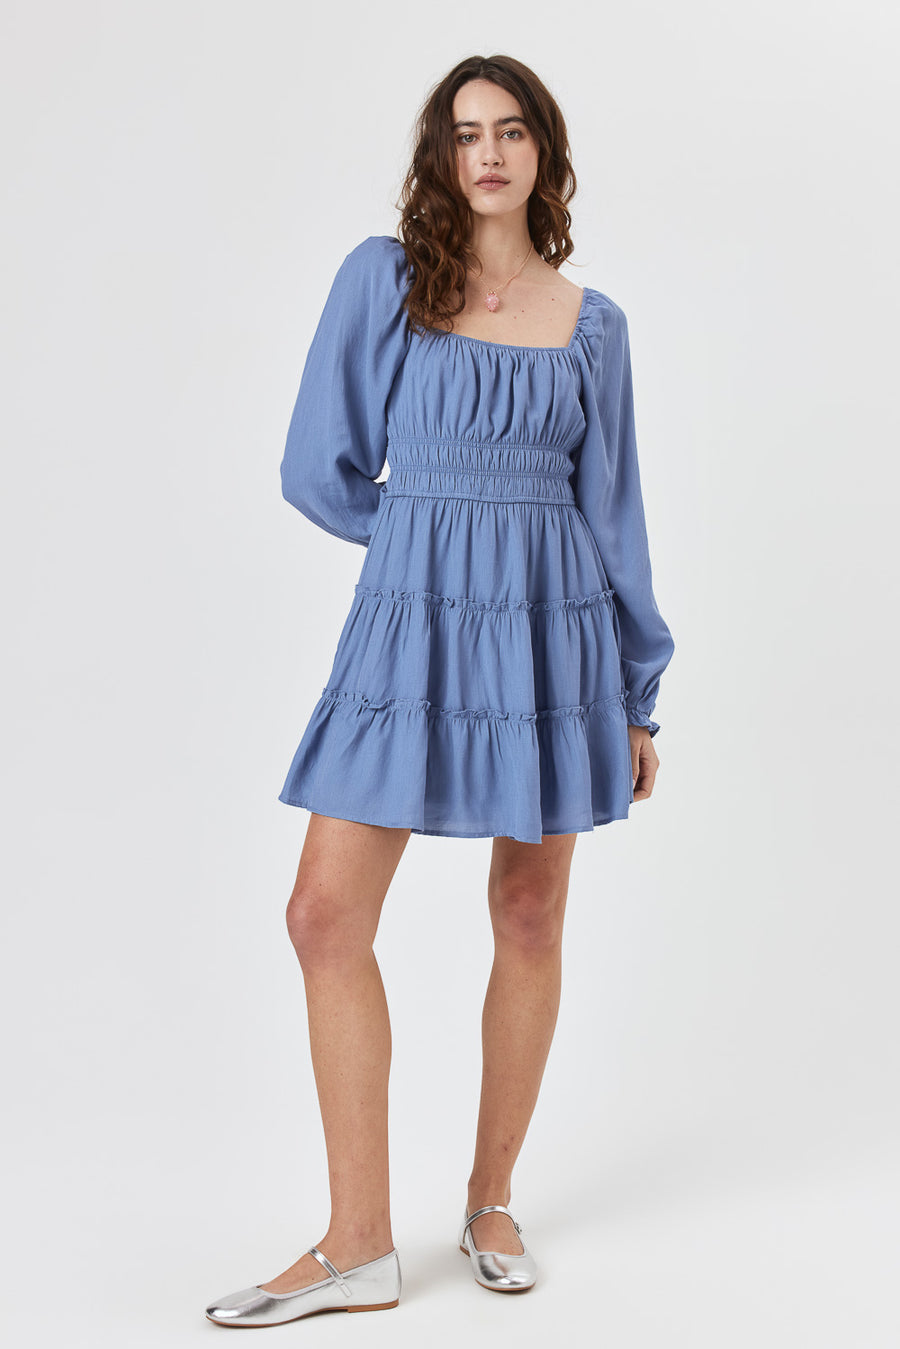 Slate Long Sleeve Ruffle Dress - Trixxi Clothing